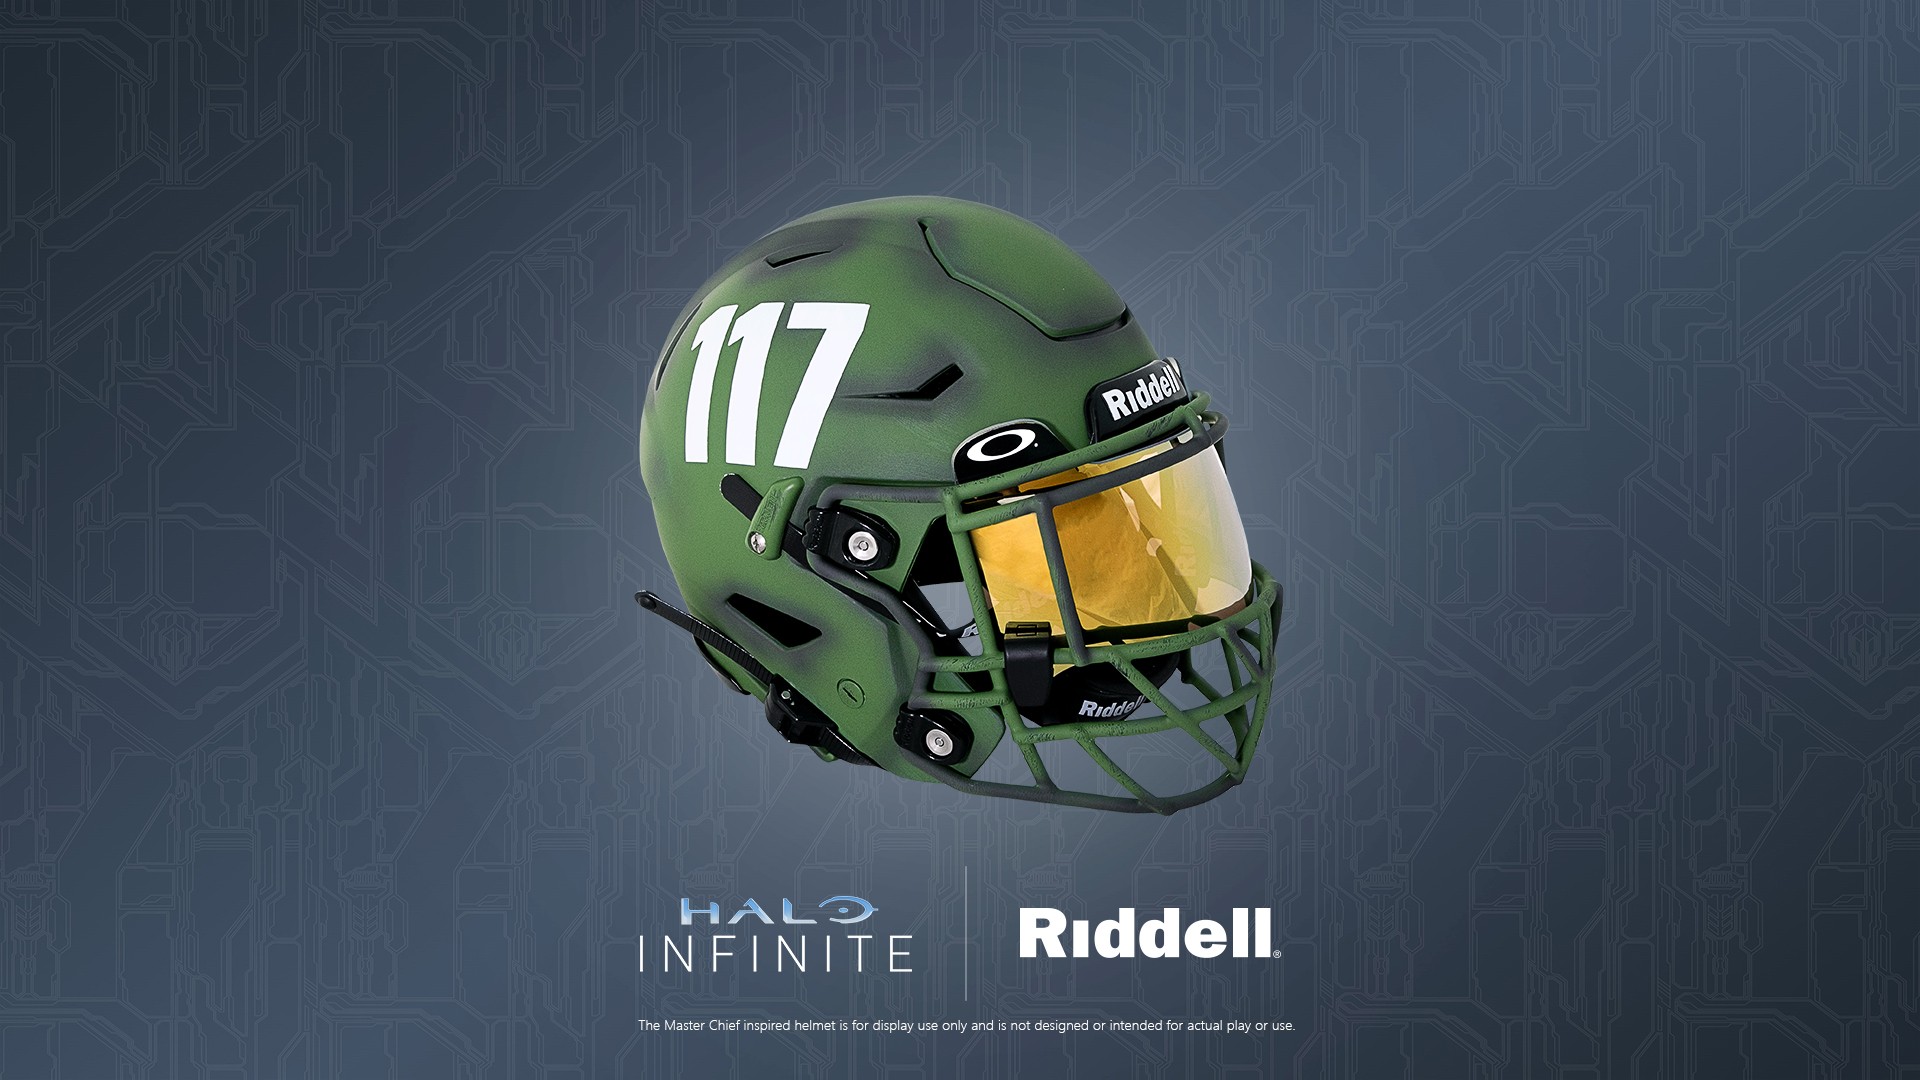 Halo and Riddell Spartan Helmet